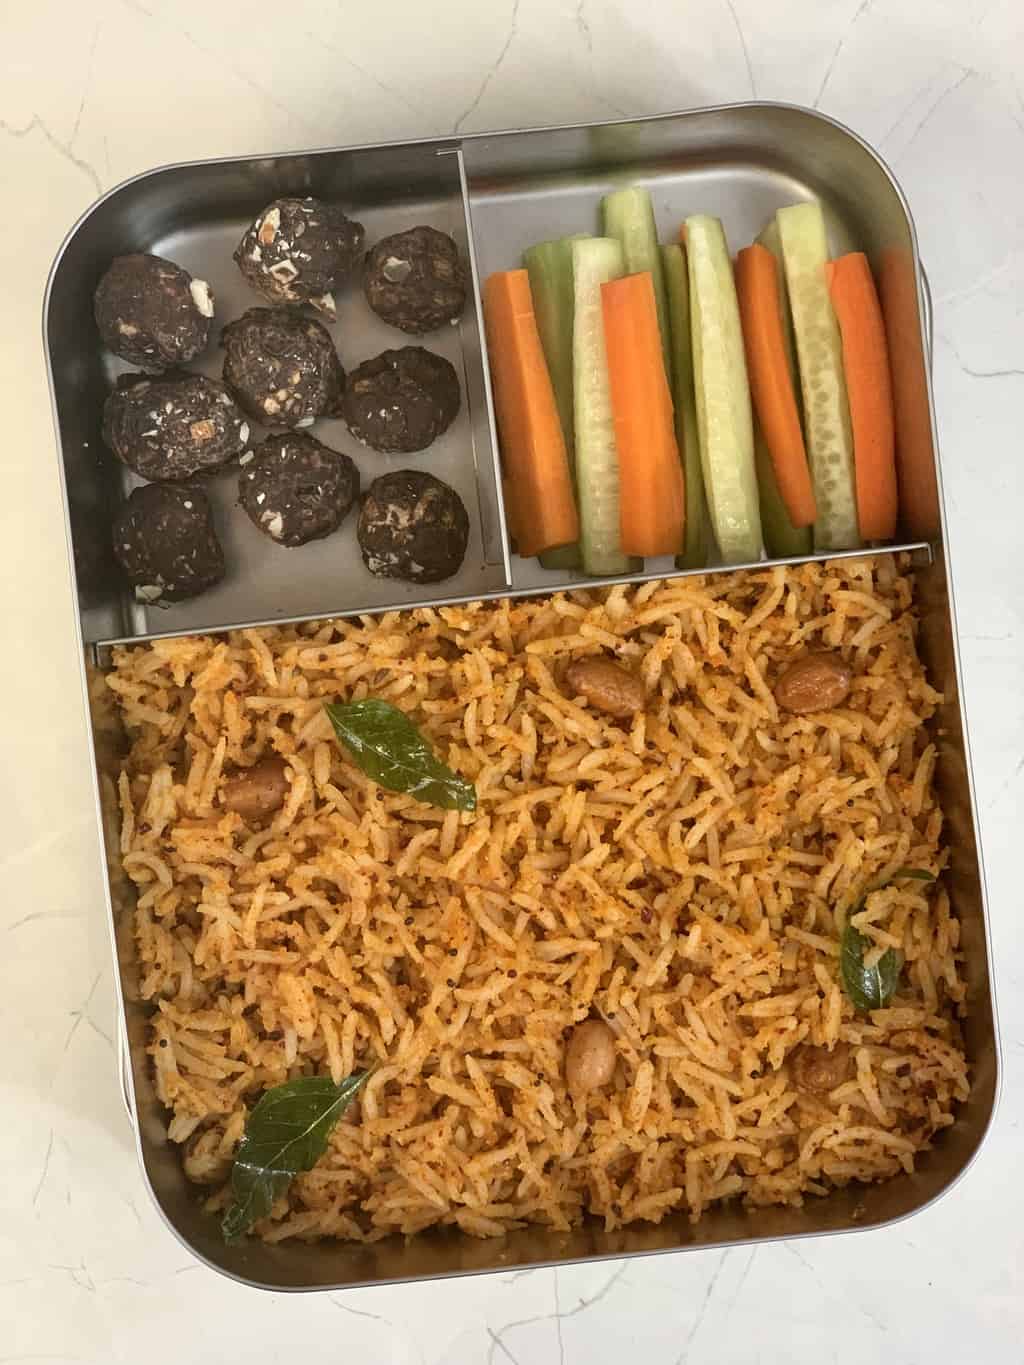 Peanut Rice + Carrot & Cucumber sticks + Chocolate Makhana